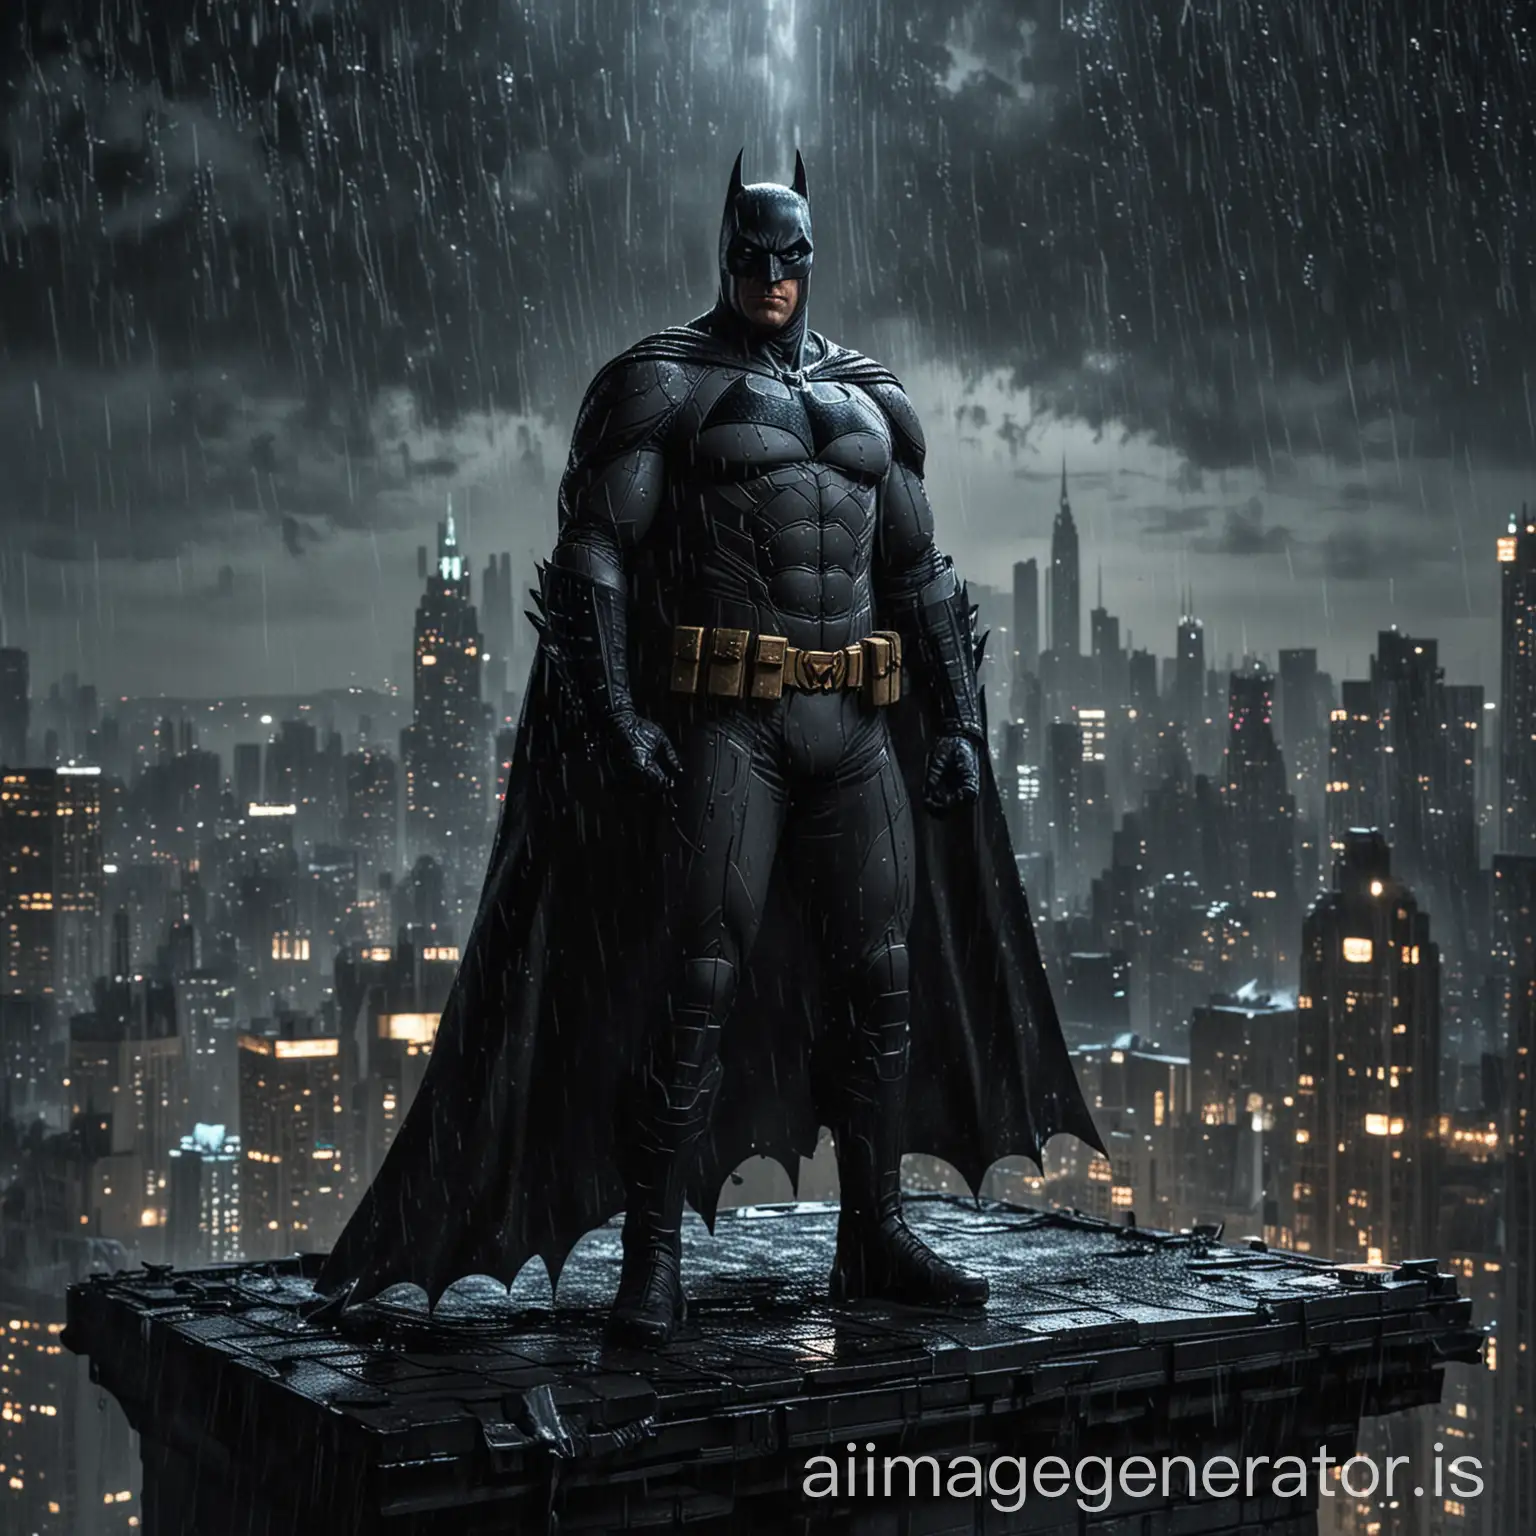 Batman-Vigilant-Night-Watch-Over-Gotham-City-Skyscrapers